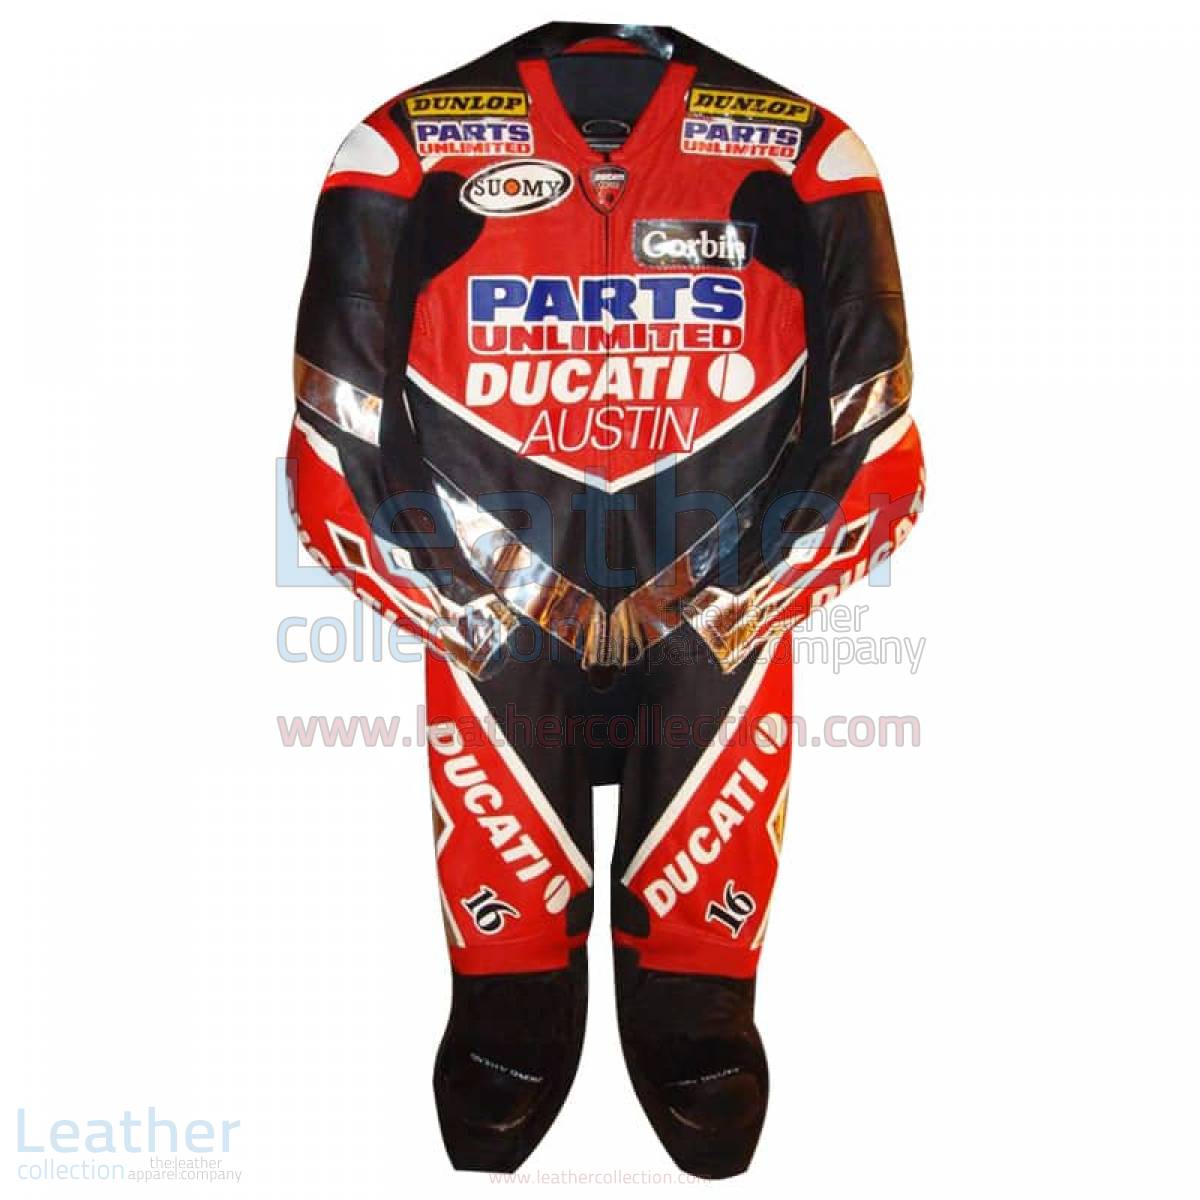 Anthony Gobert Austin Ducati 2003 AMA Race Suit